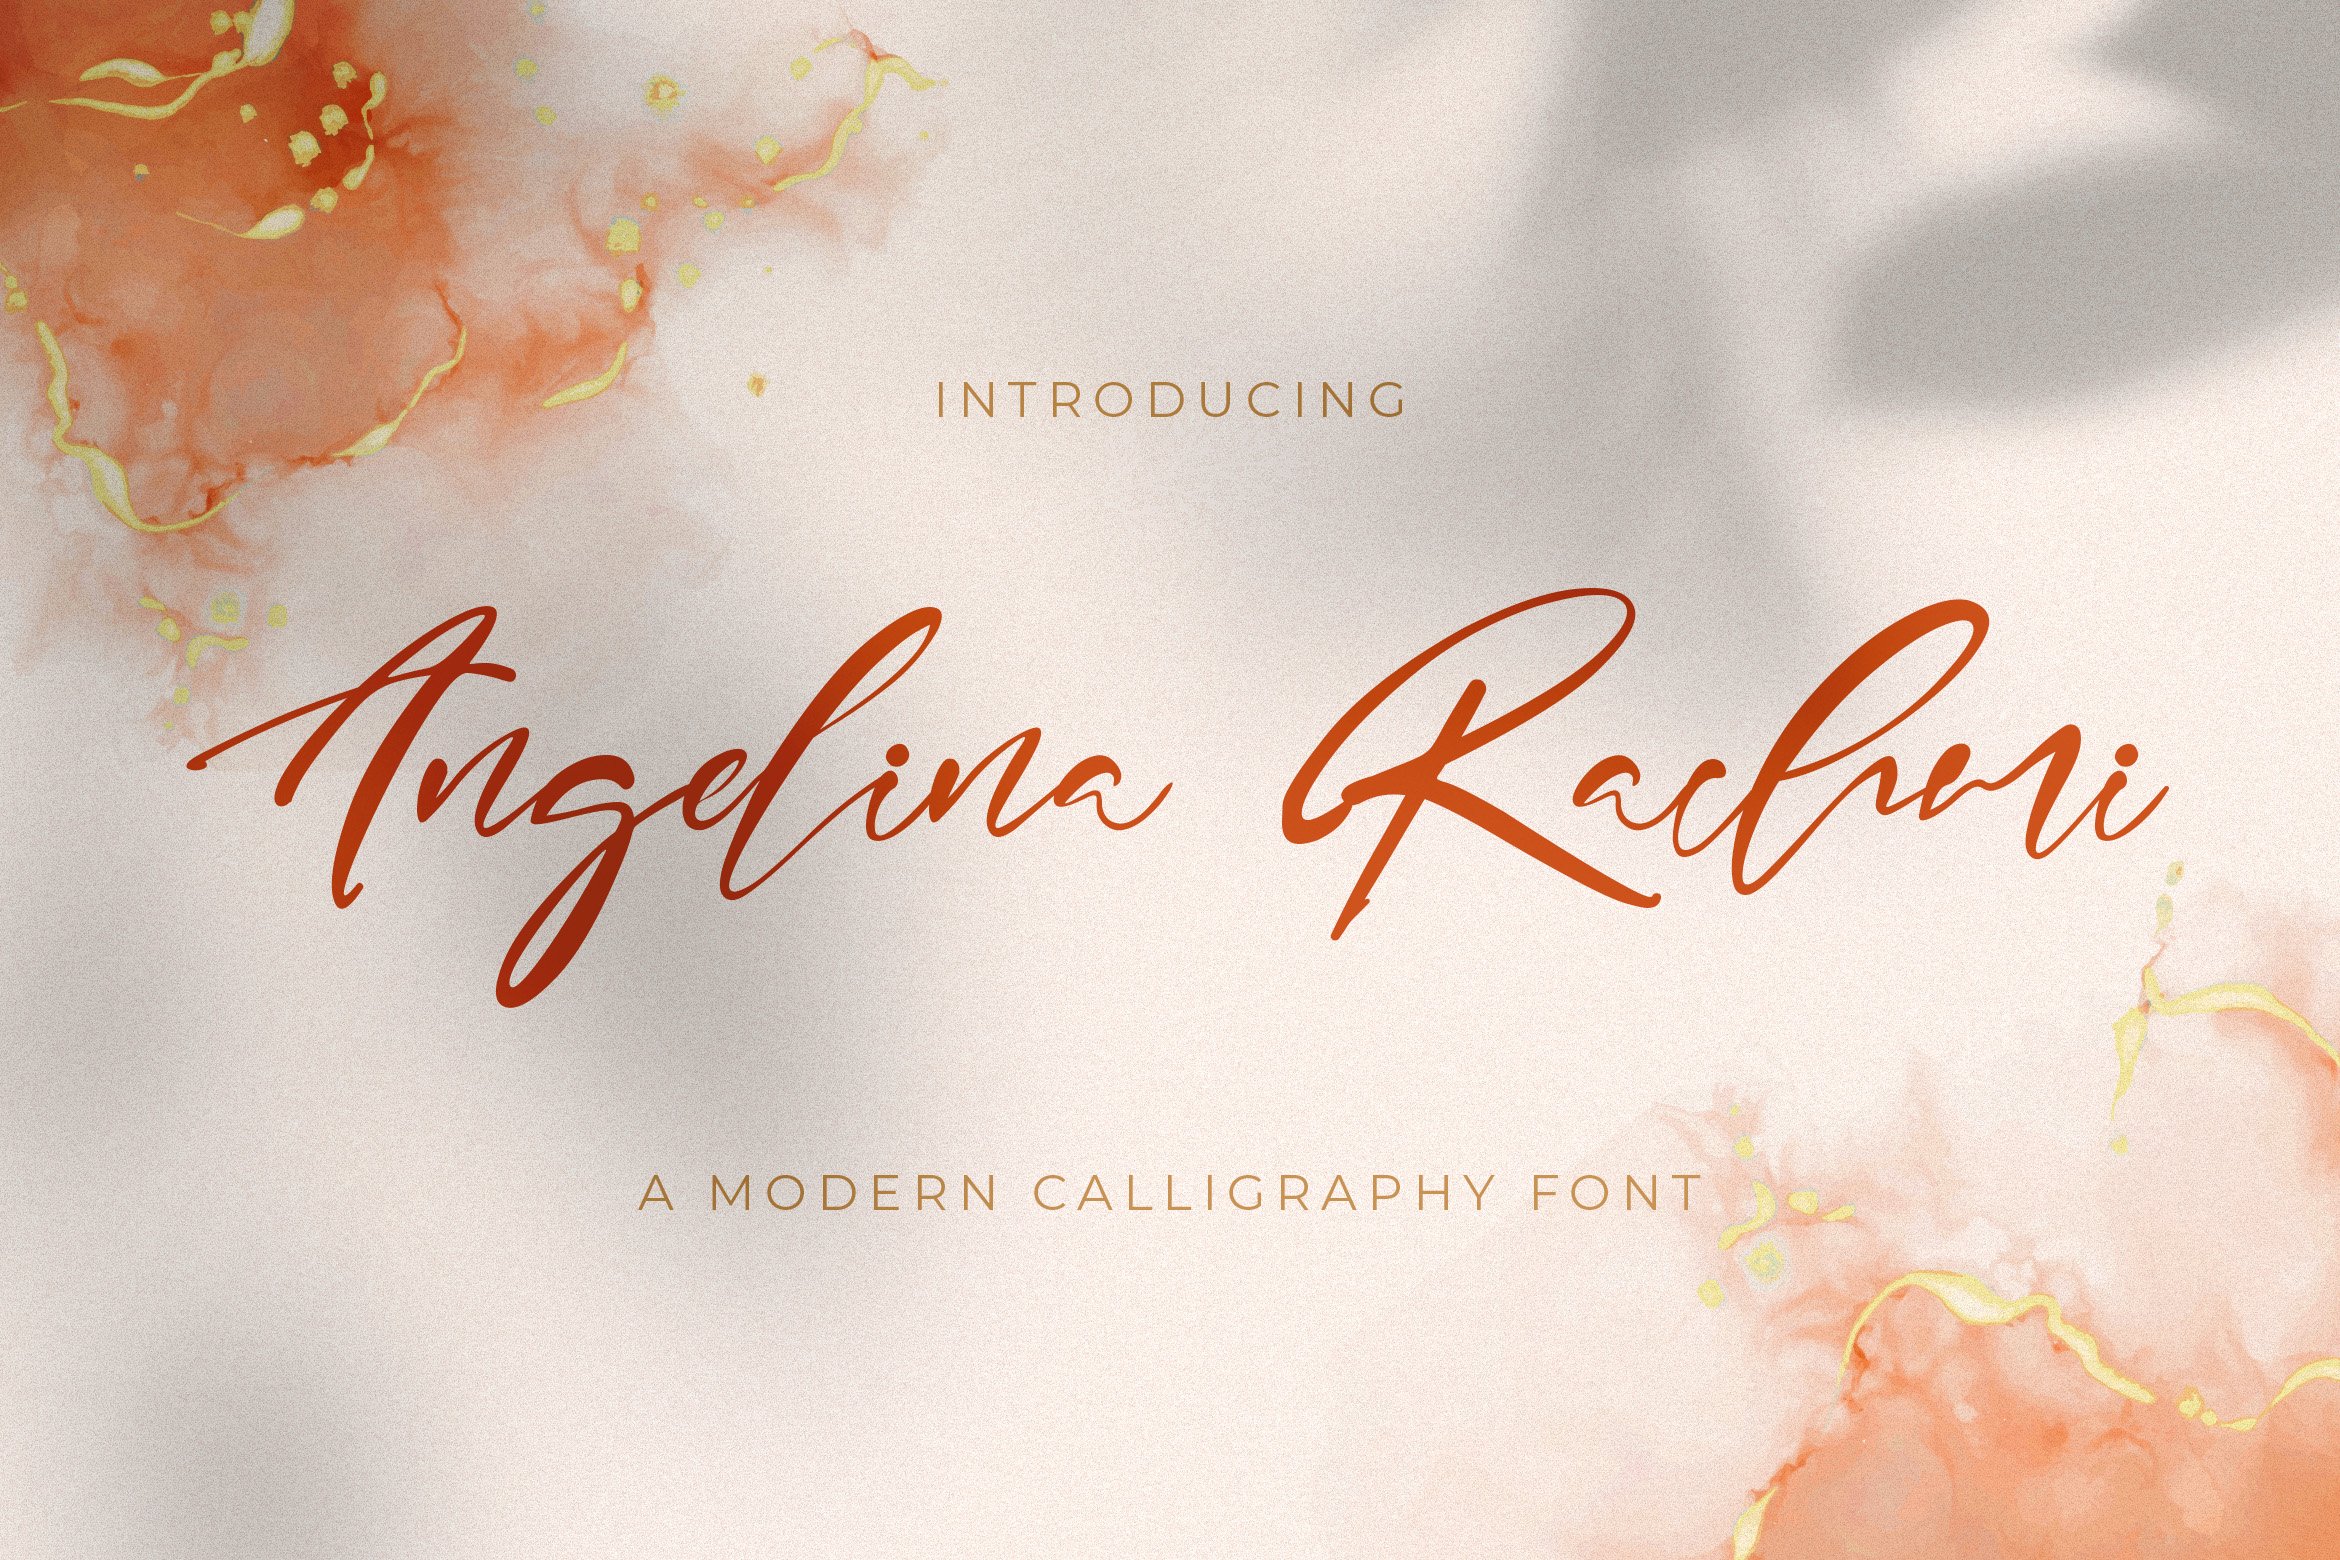 Angelina Rachmi - Calligraphy Font cover image.